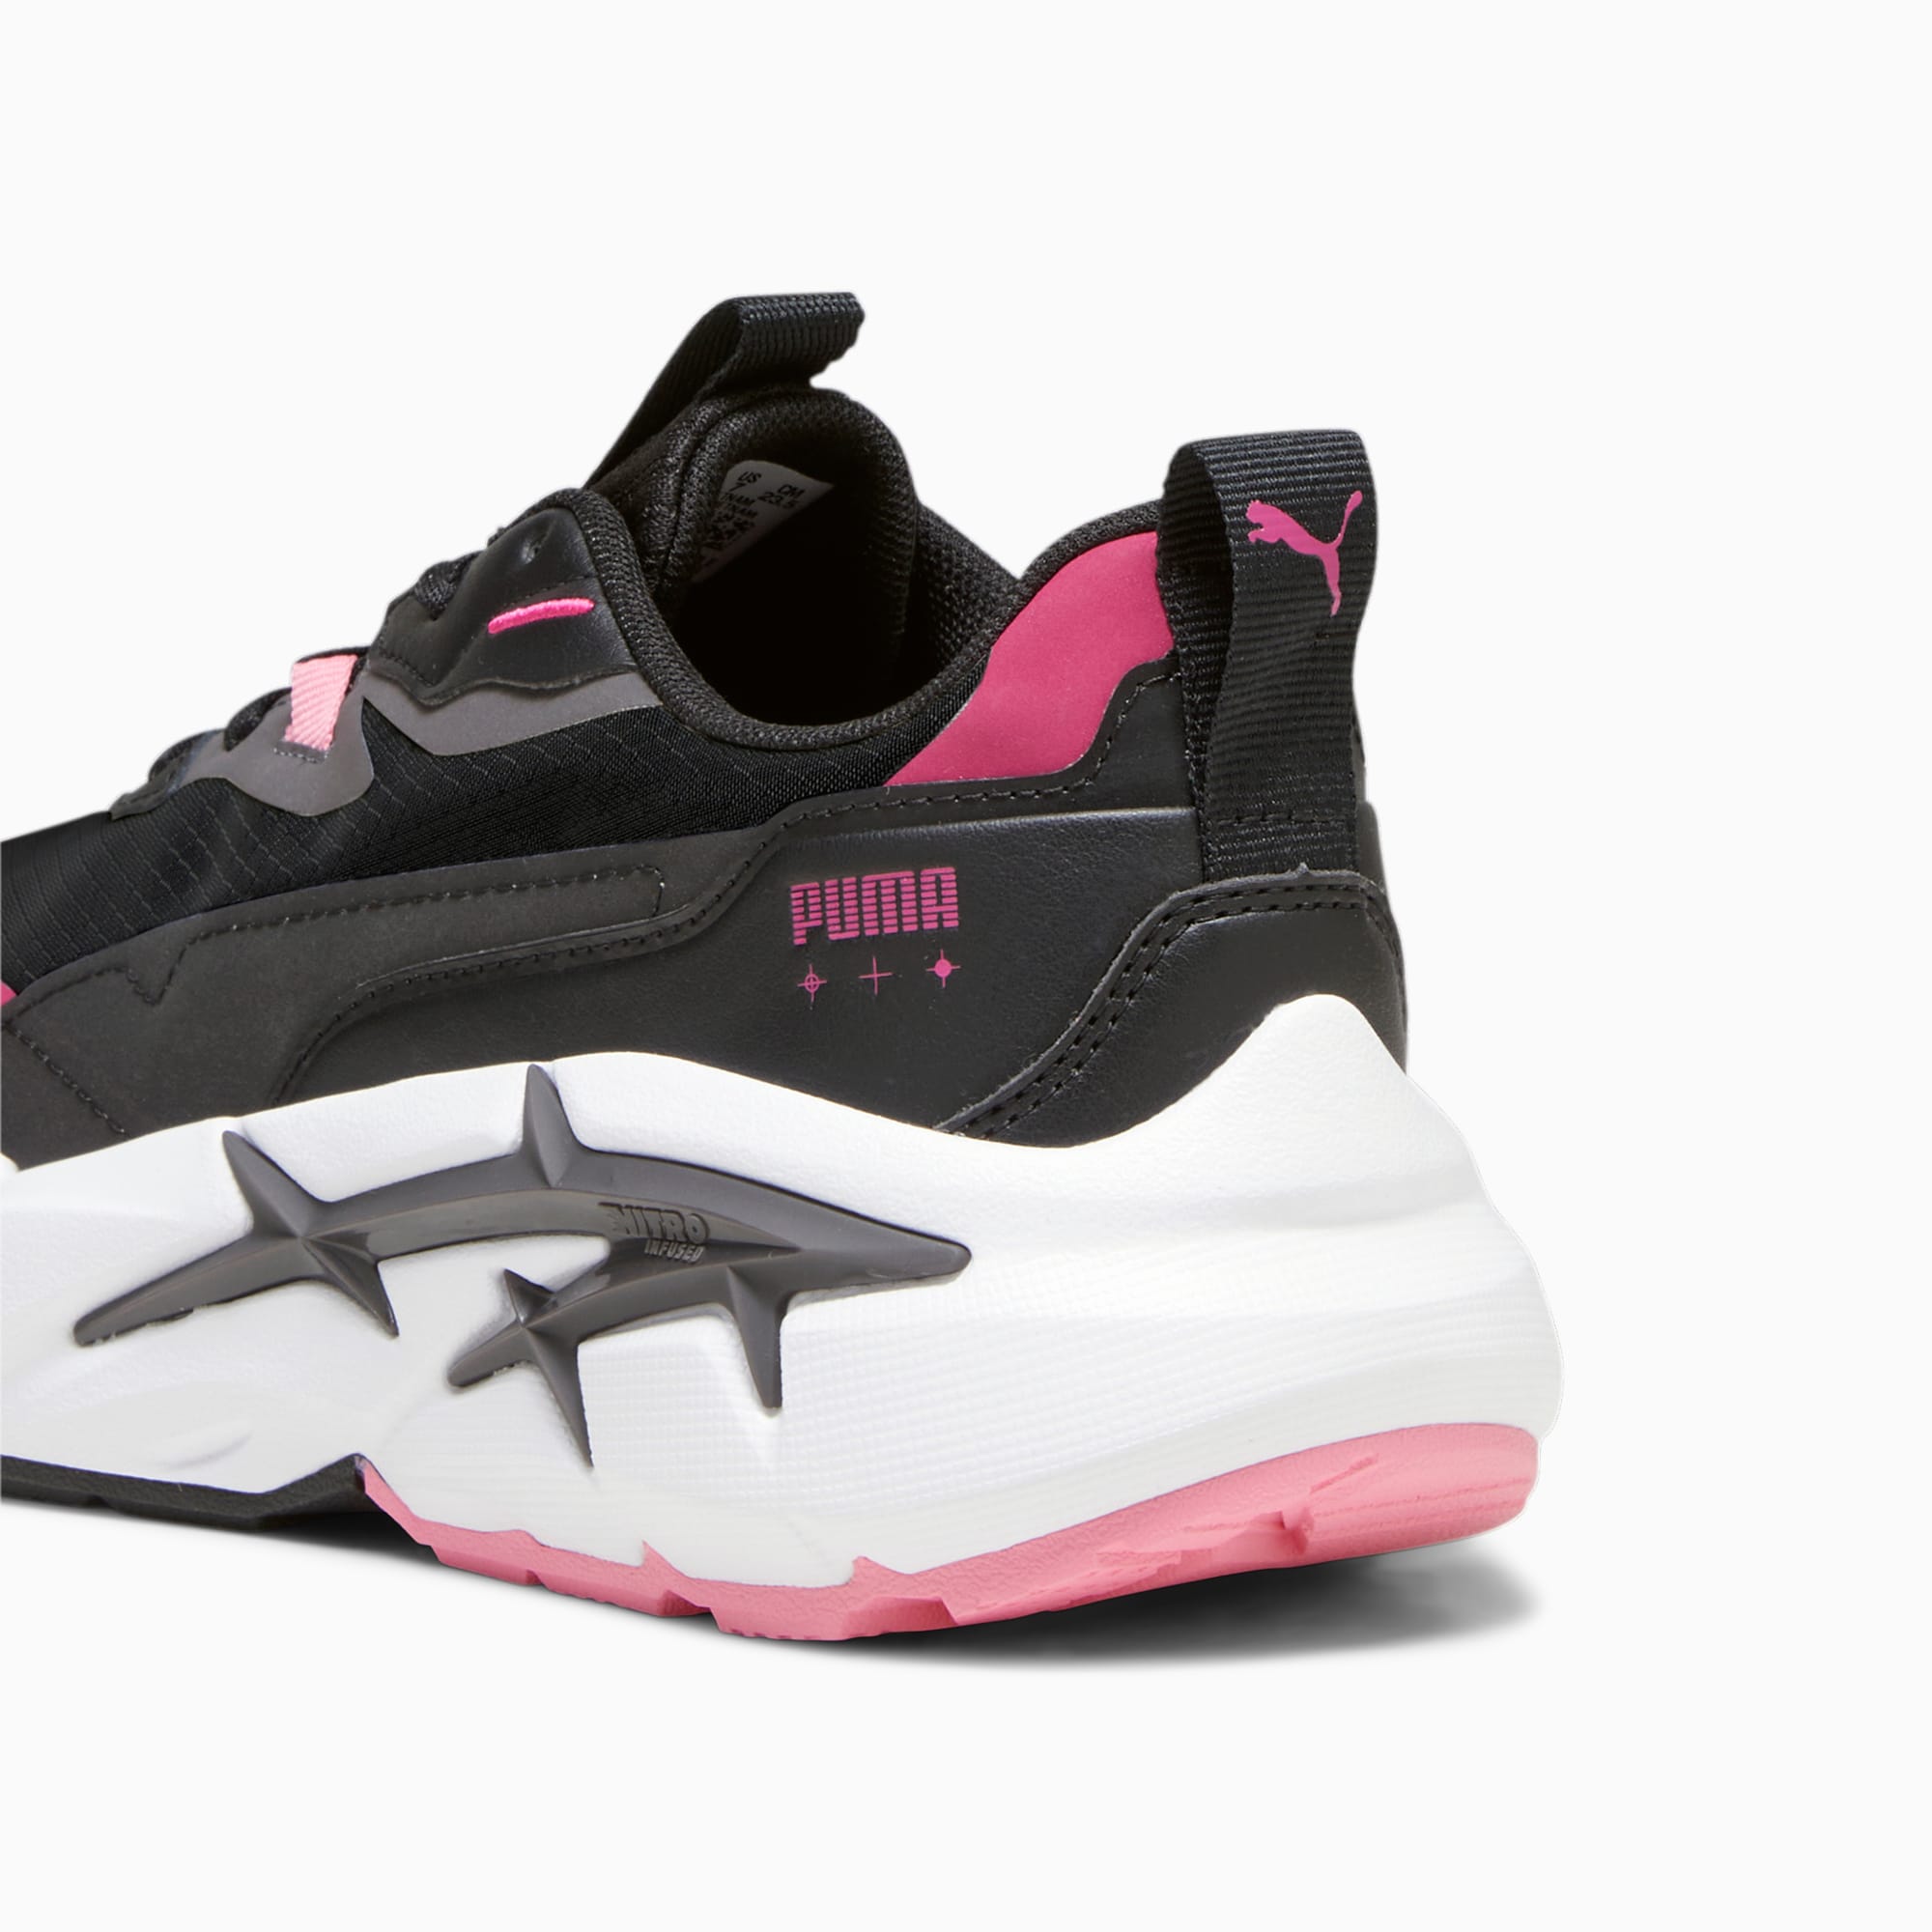 PUMA Spina Nitro Women's Sneakers, Black/Pinktastic, Size 35,5, Shoes